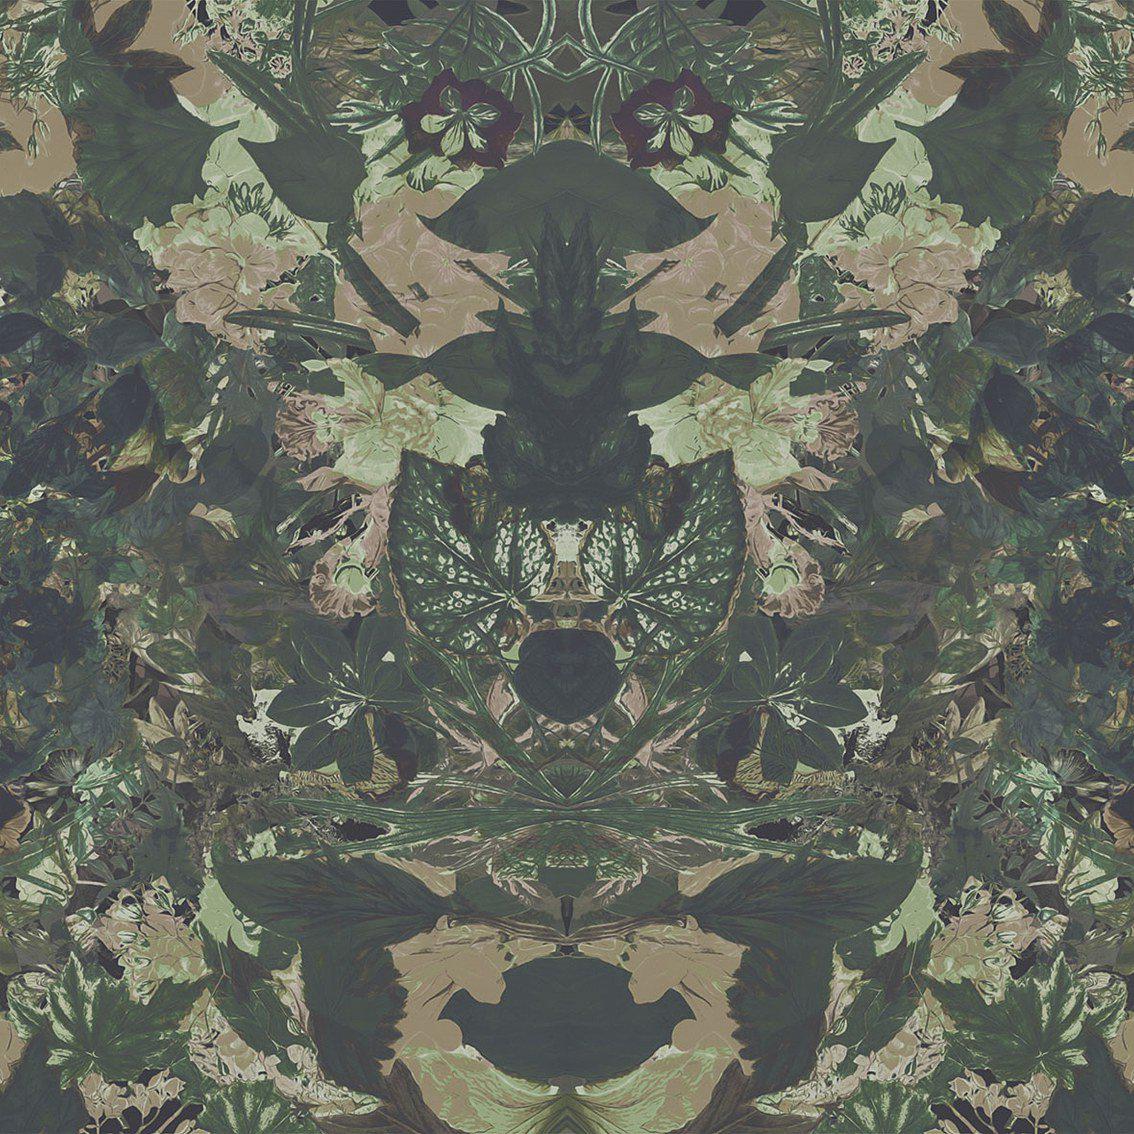 Flower Power-Digital Wallpaper-London Art-Green-17003-02